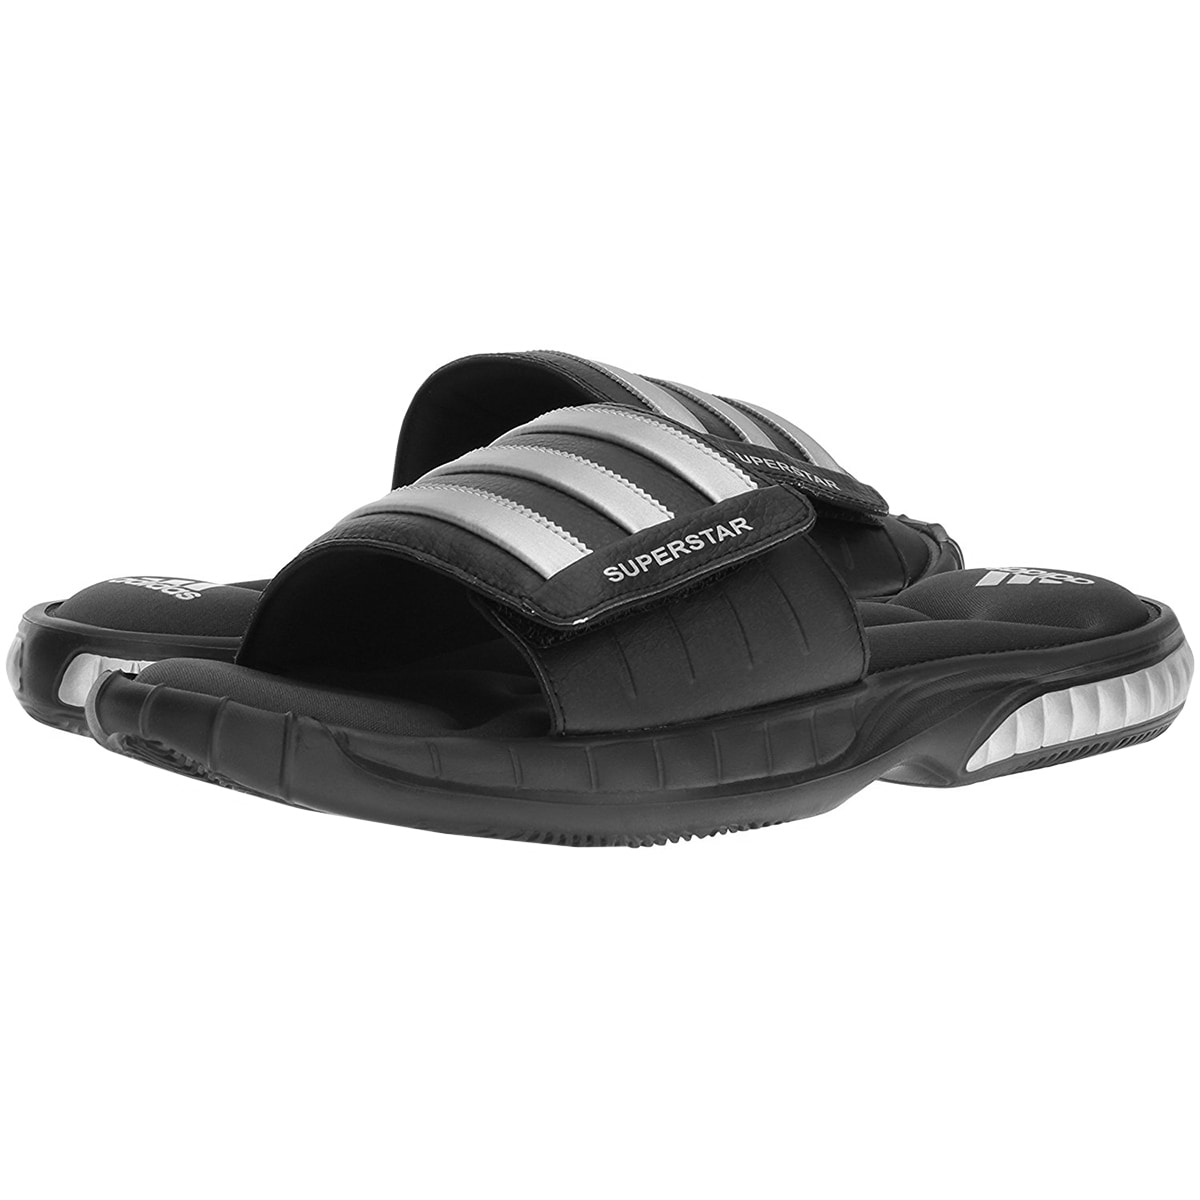 adidas men's superstar 3g cloudfoam athletic slide sandals